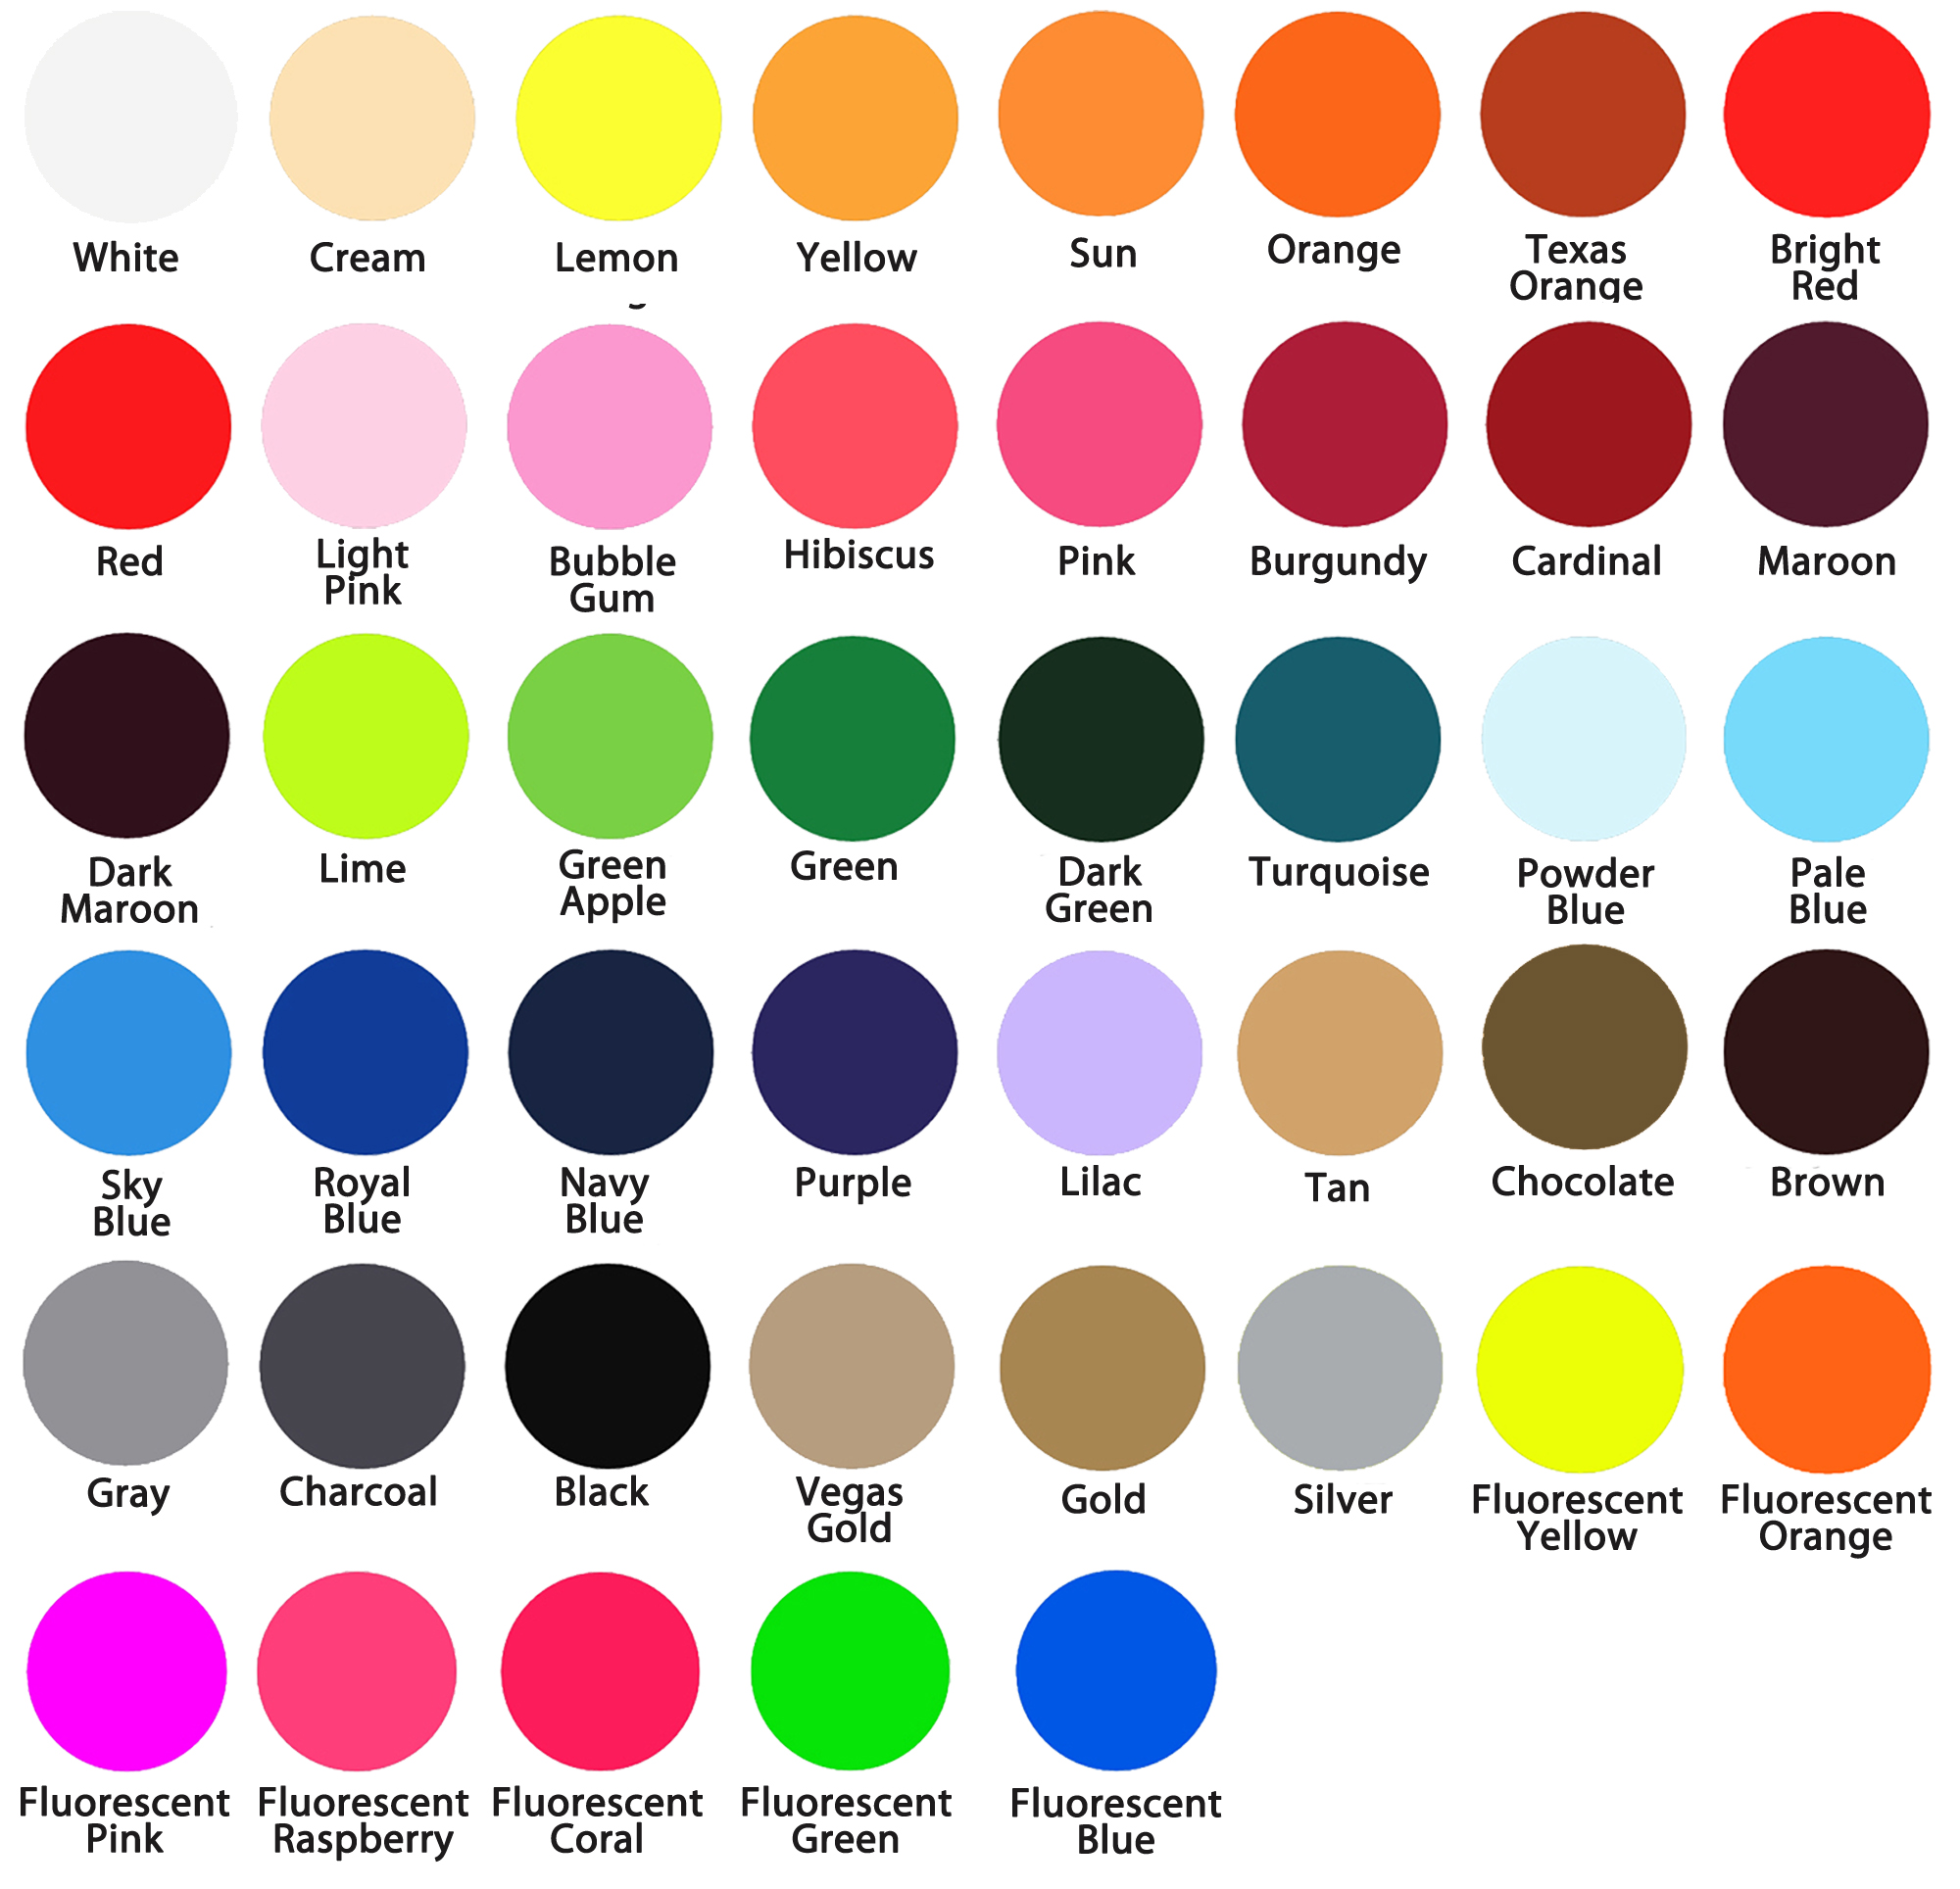 Siser Easyweed Htv Color Chart